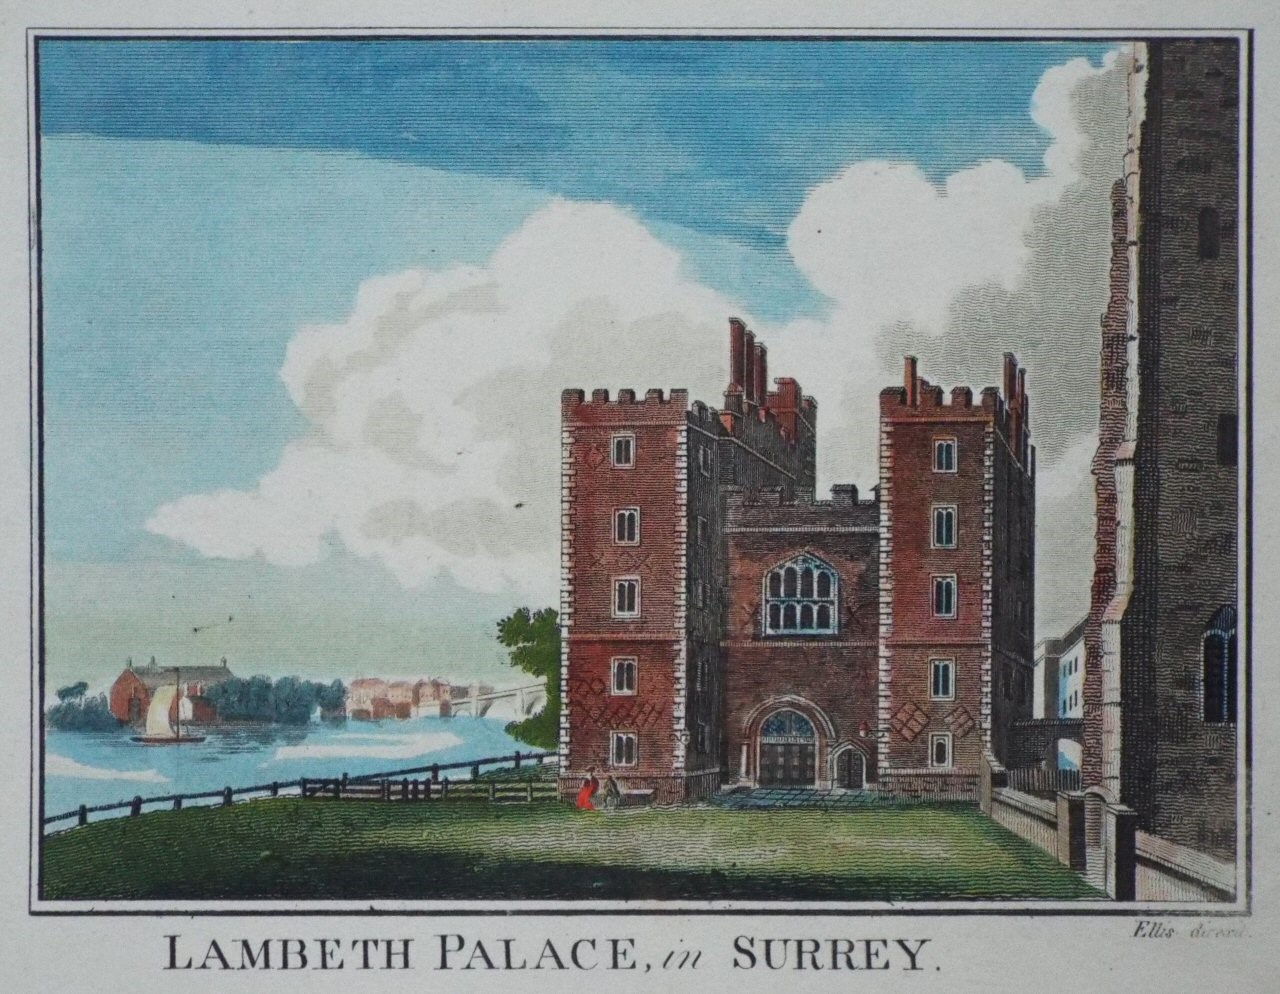 Print - Lambeth Palace, in Surrey. - 